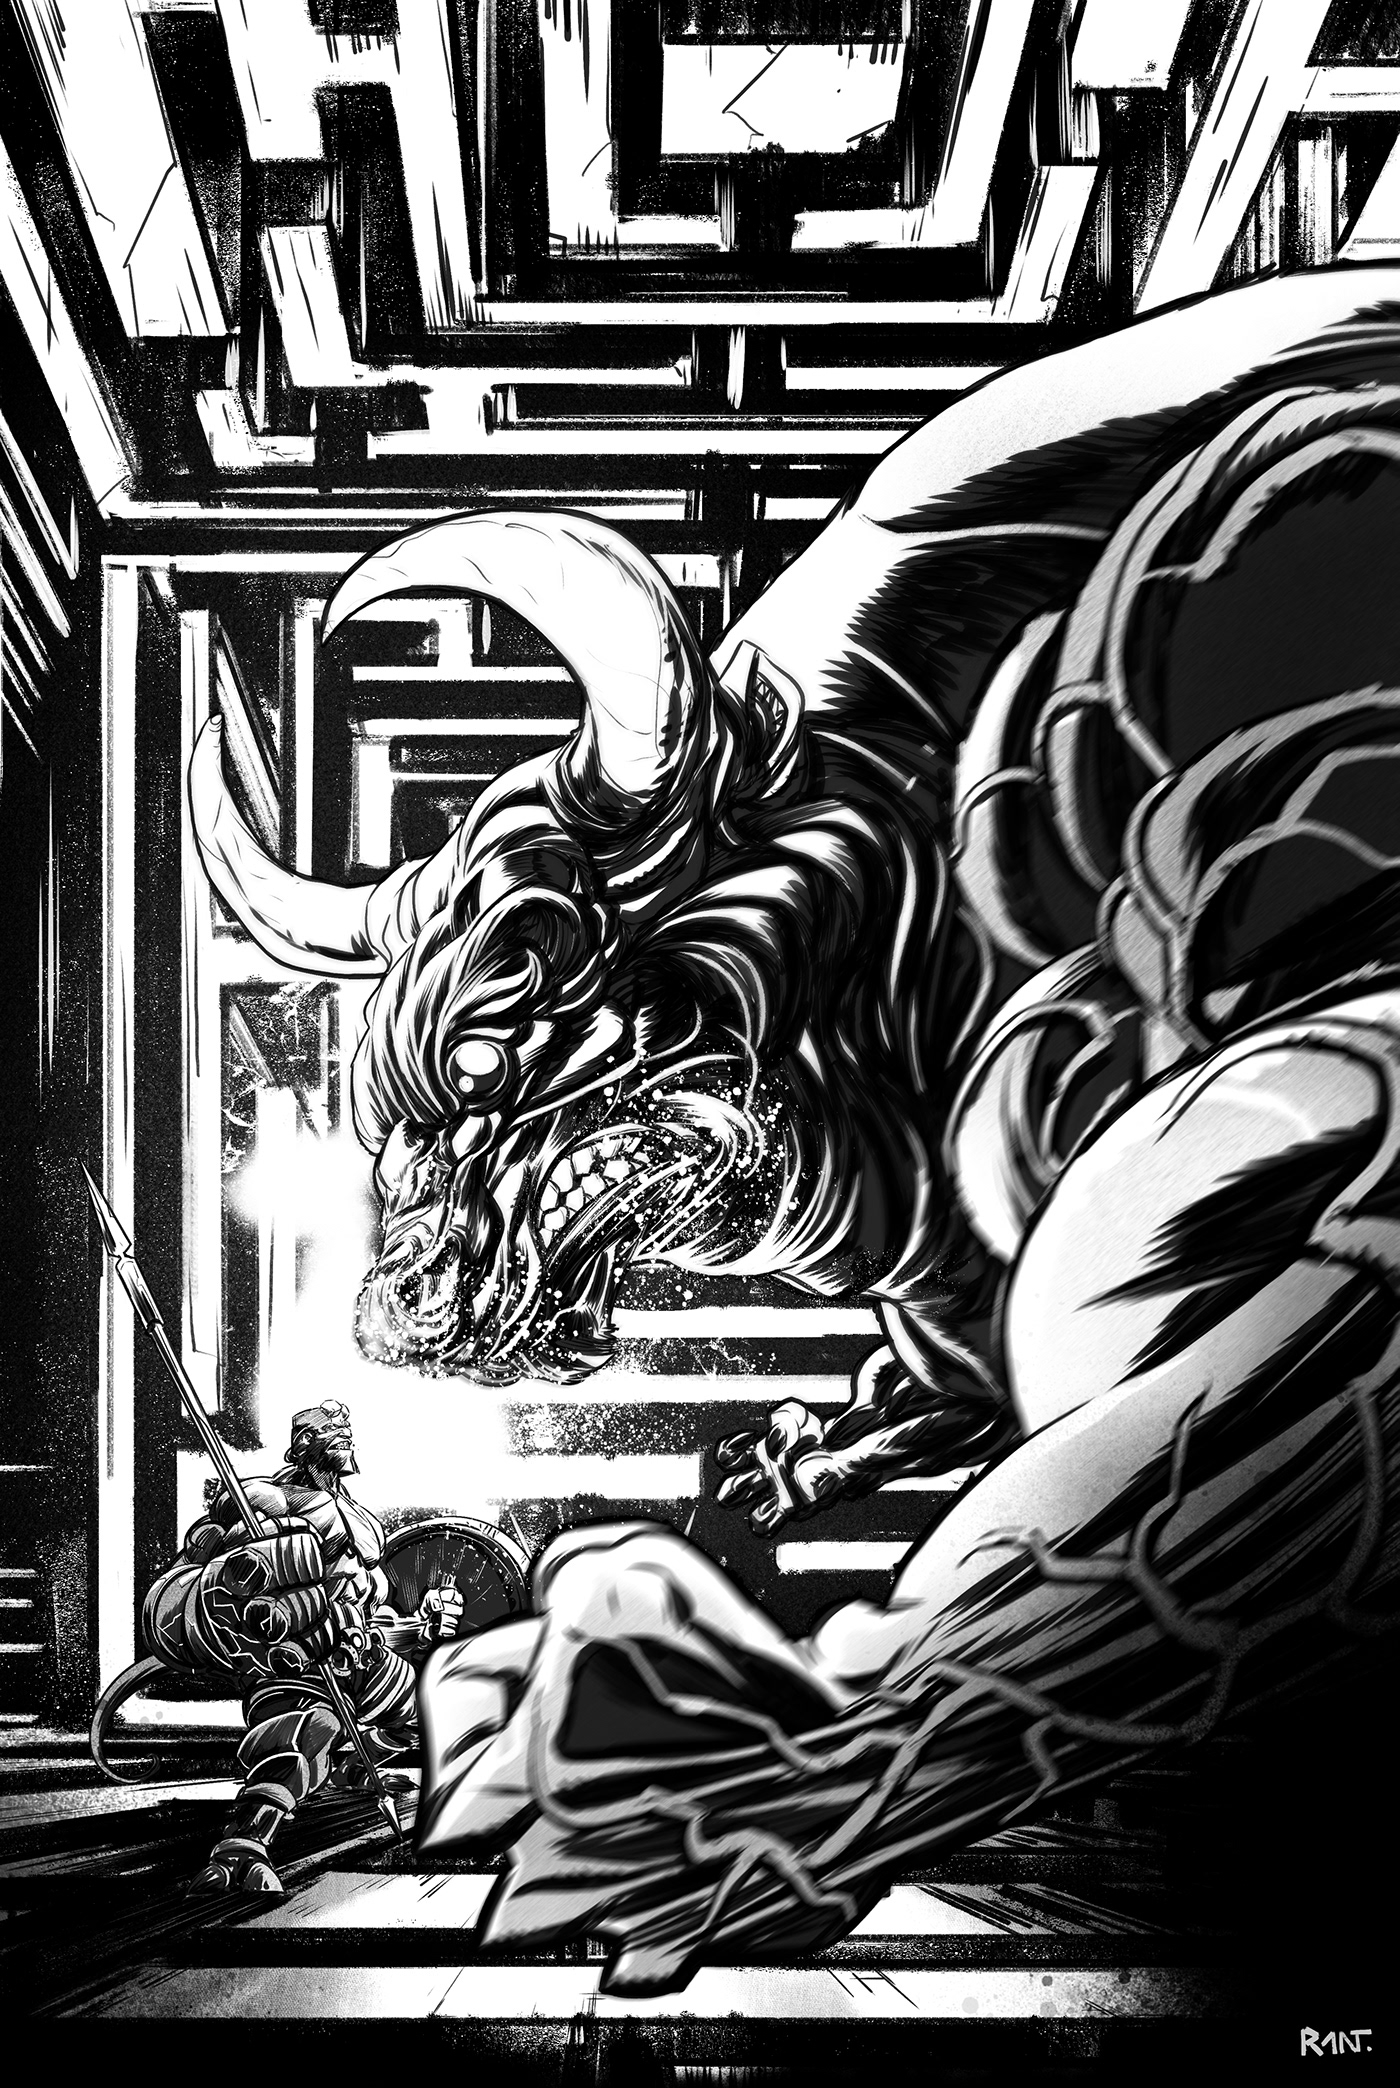 Hellboy comic minotaur monster Character design  darkhorsecomics Sequential Art Comic Book ILLUSTRATION  ComicArt